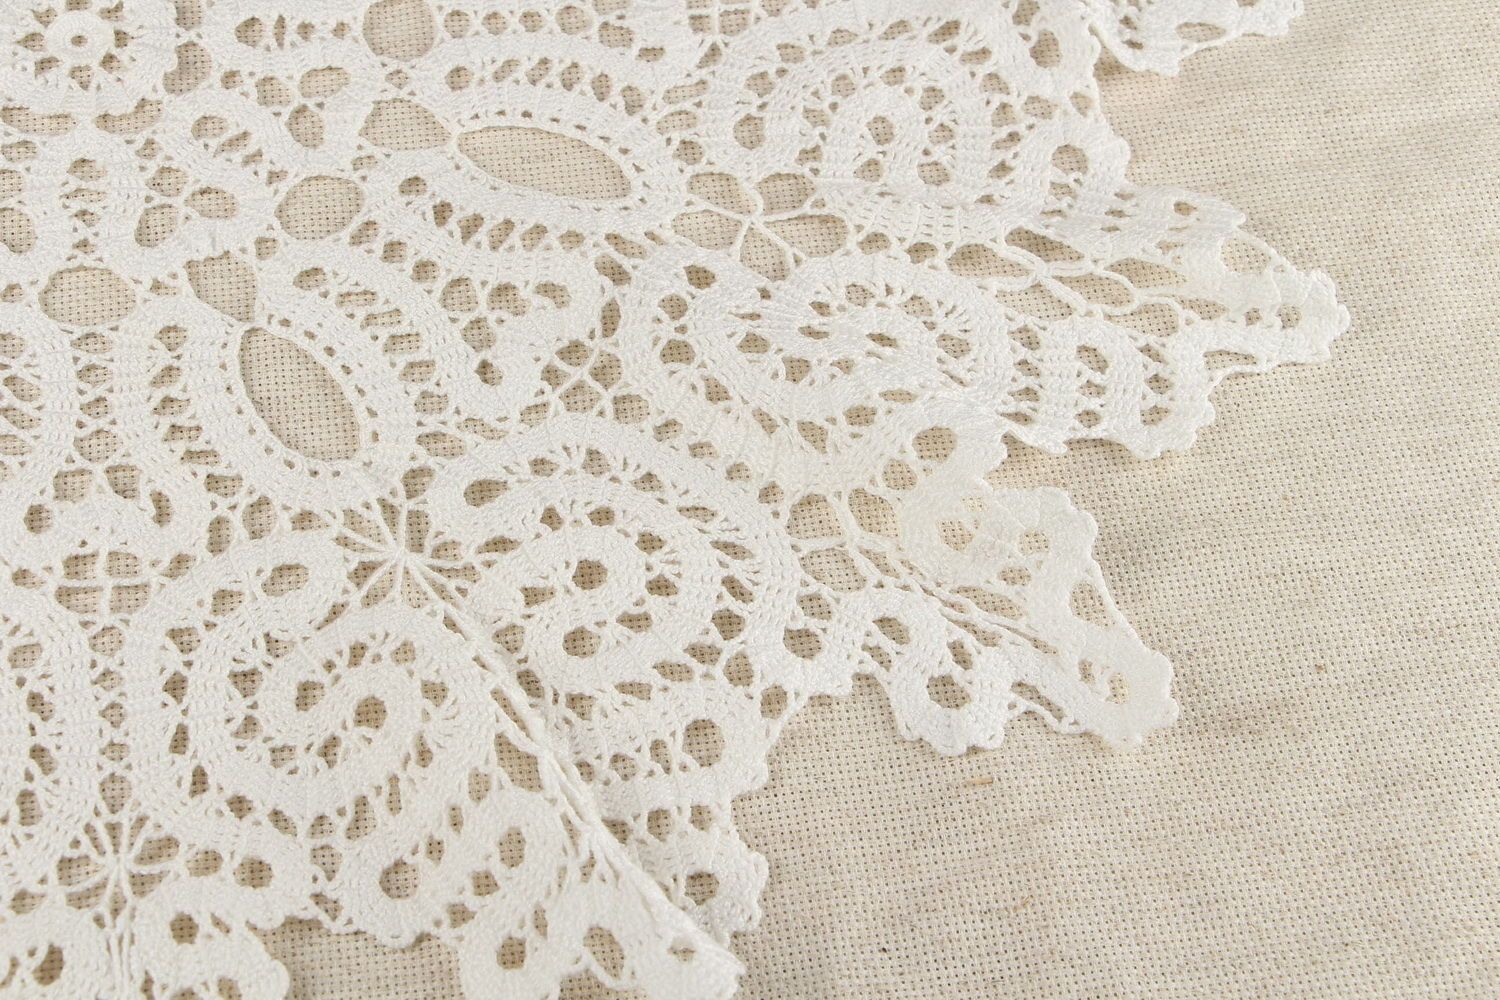 Napkin made in brugge lace technique photo 3